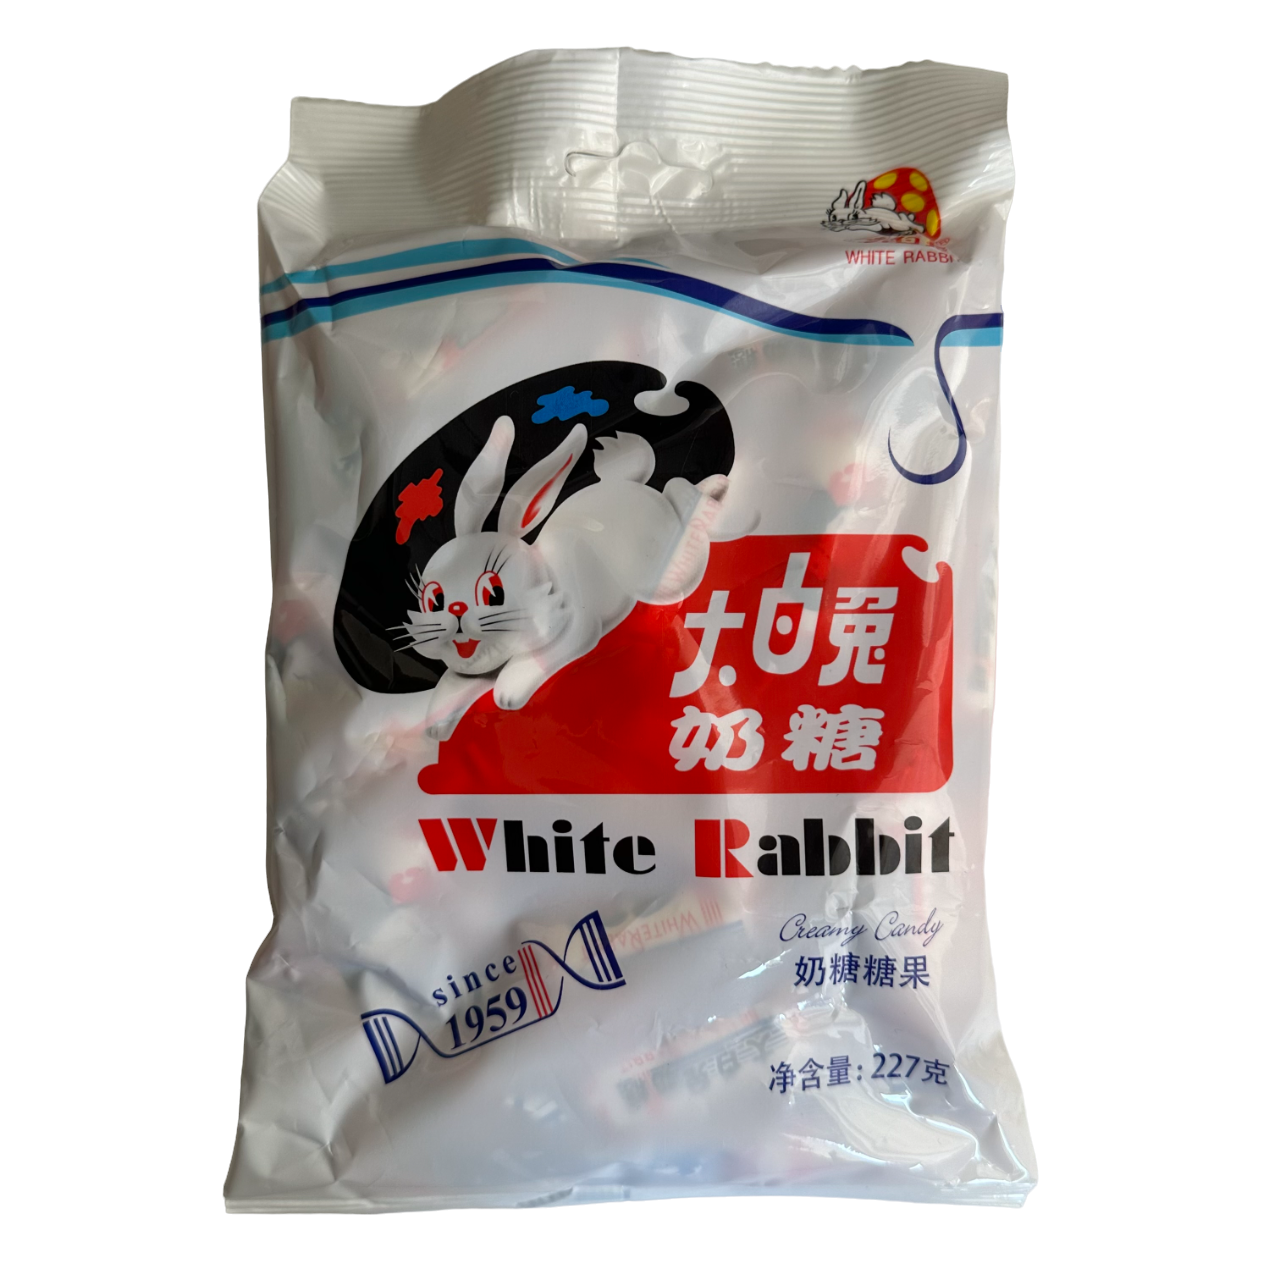 8oz 227g White Rabbit Creamy Candy (Original) 上海大白兔奶糖零食 - $14.85